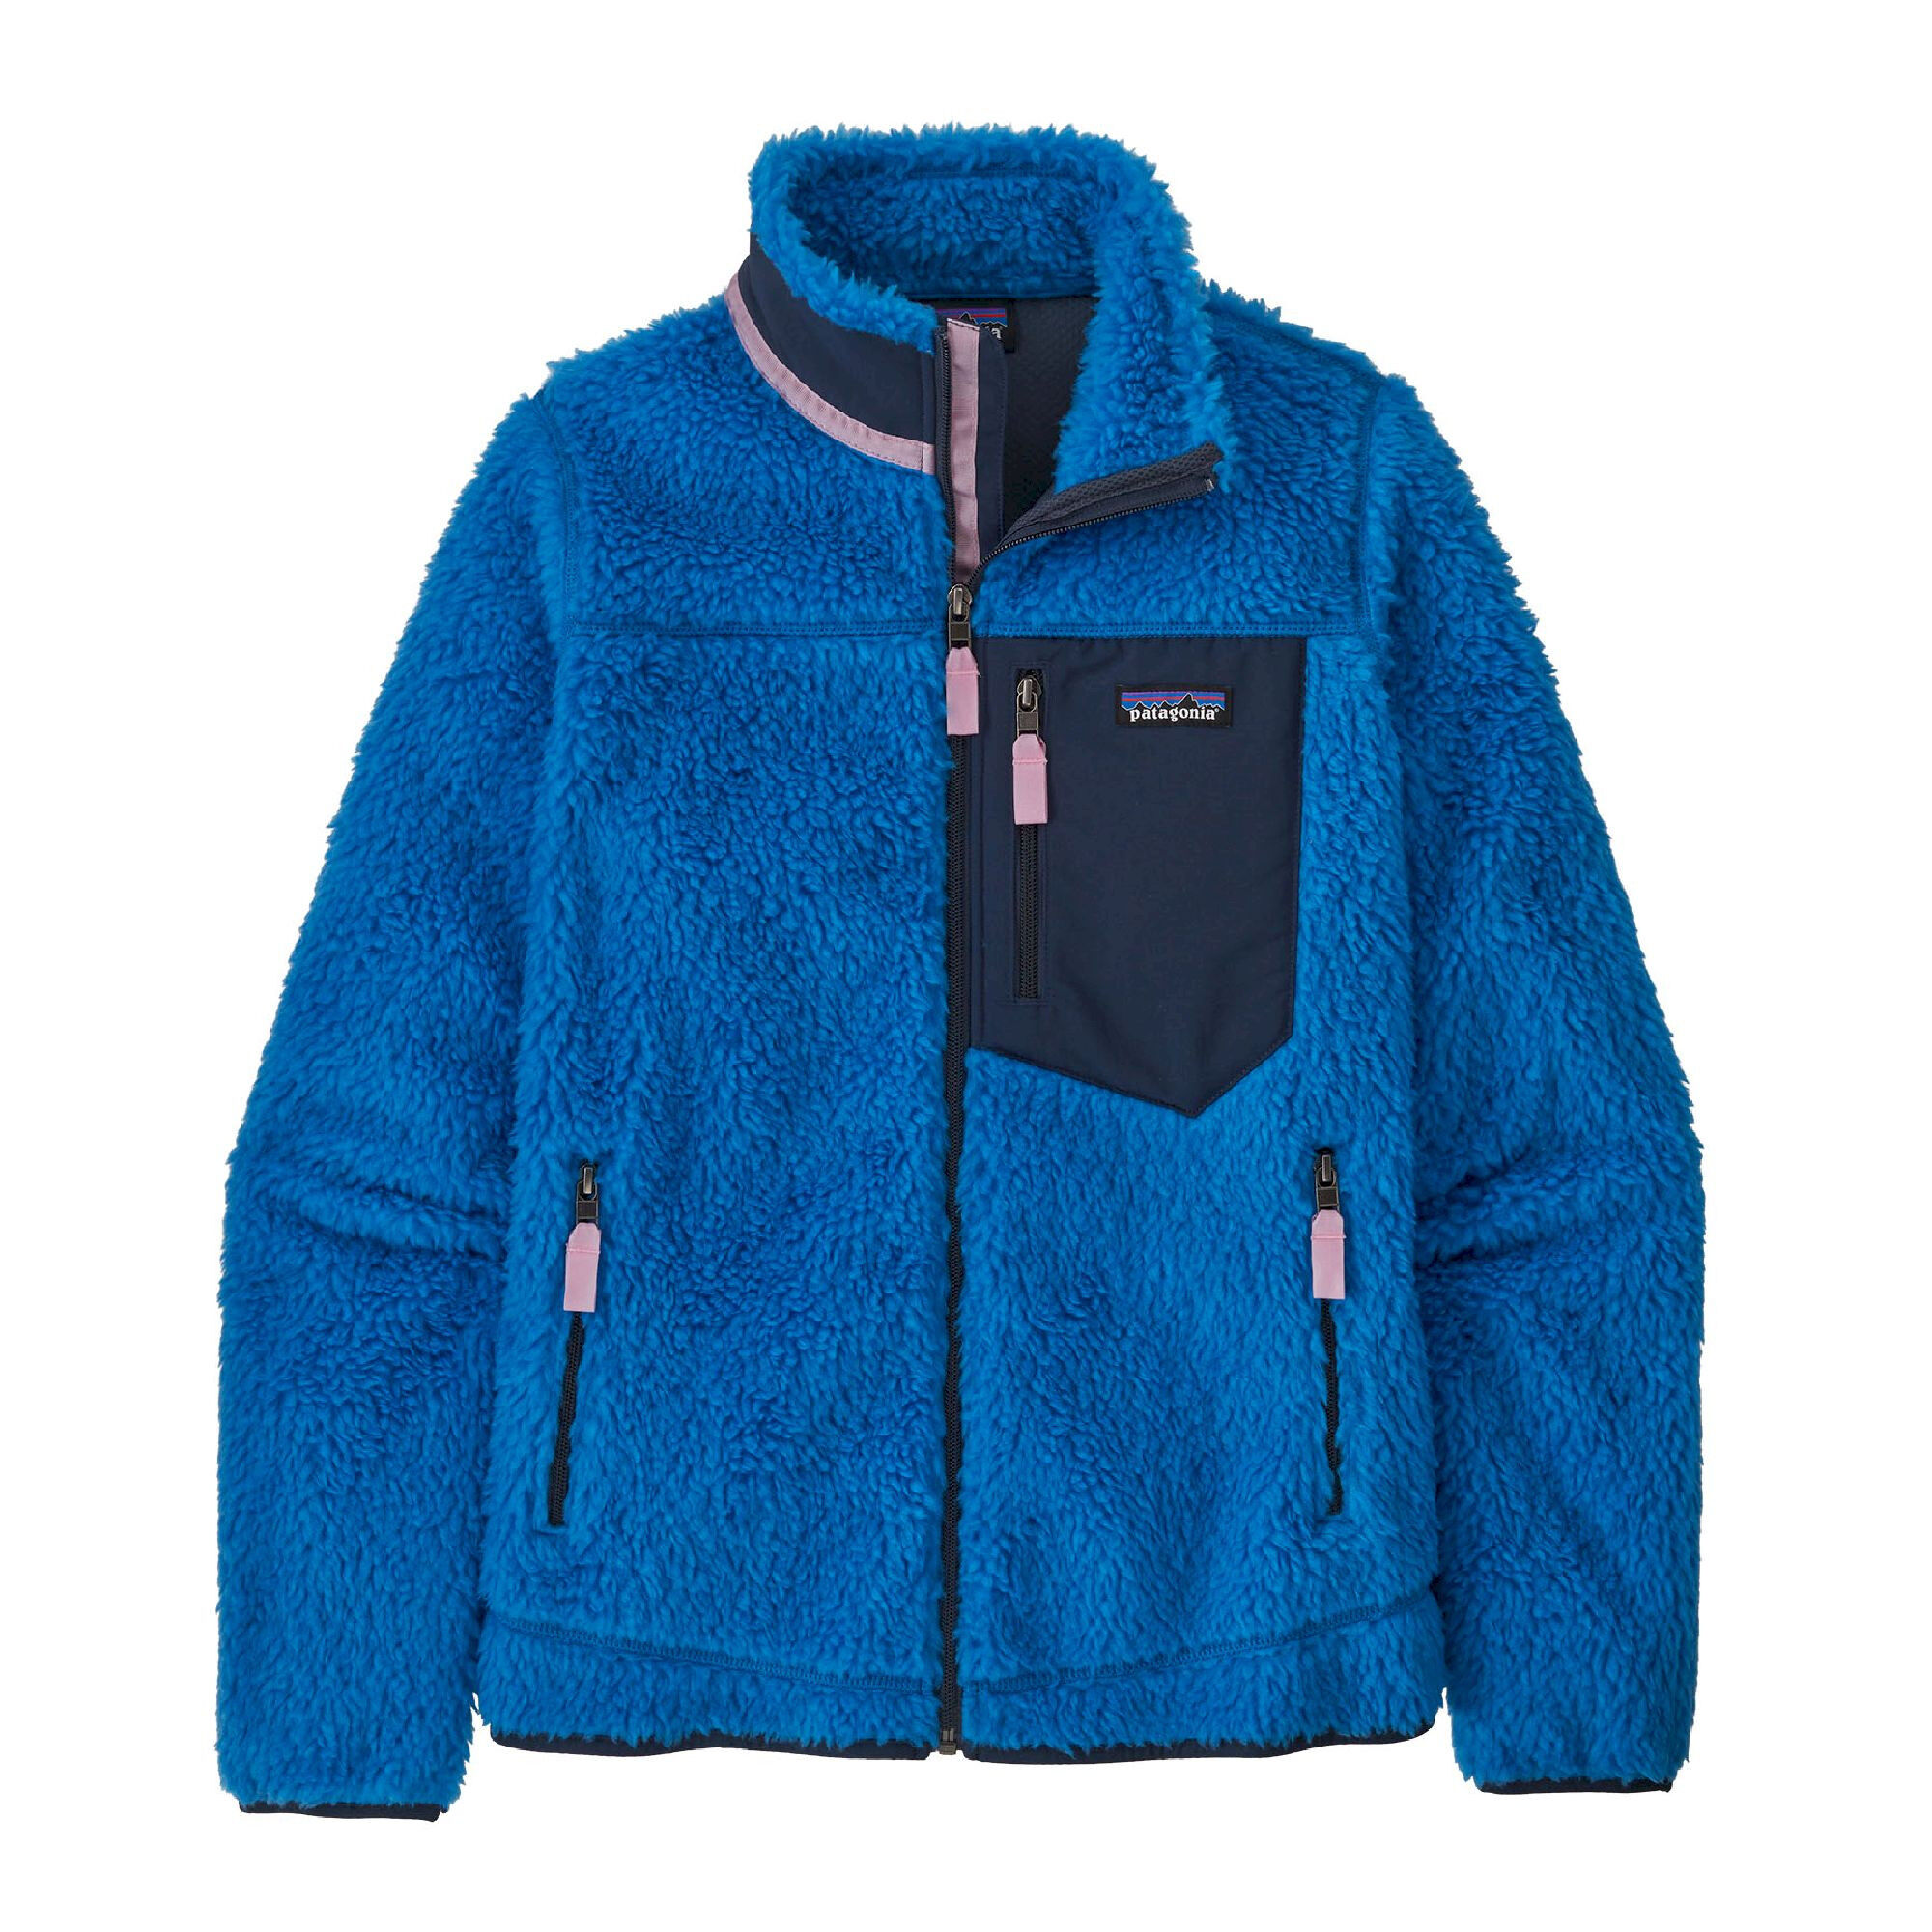 Patagonia - Classic Retro-X Jkt - Fleece jacket - Women's